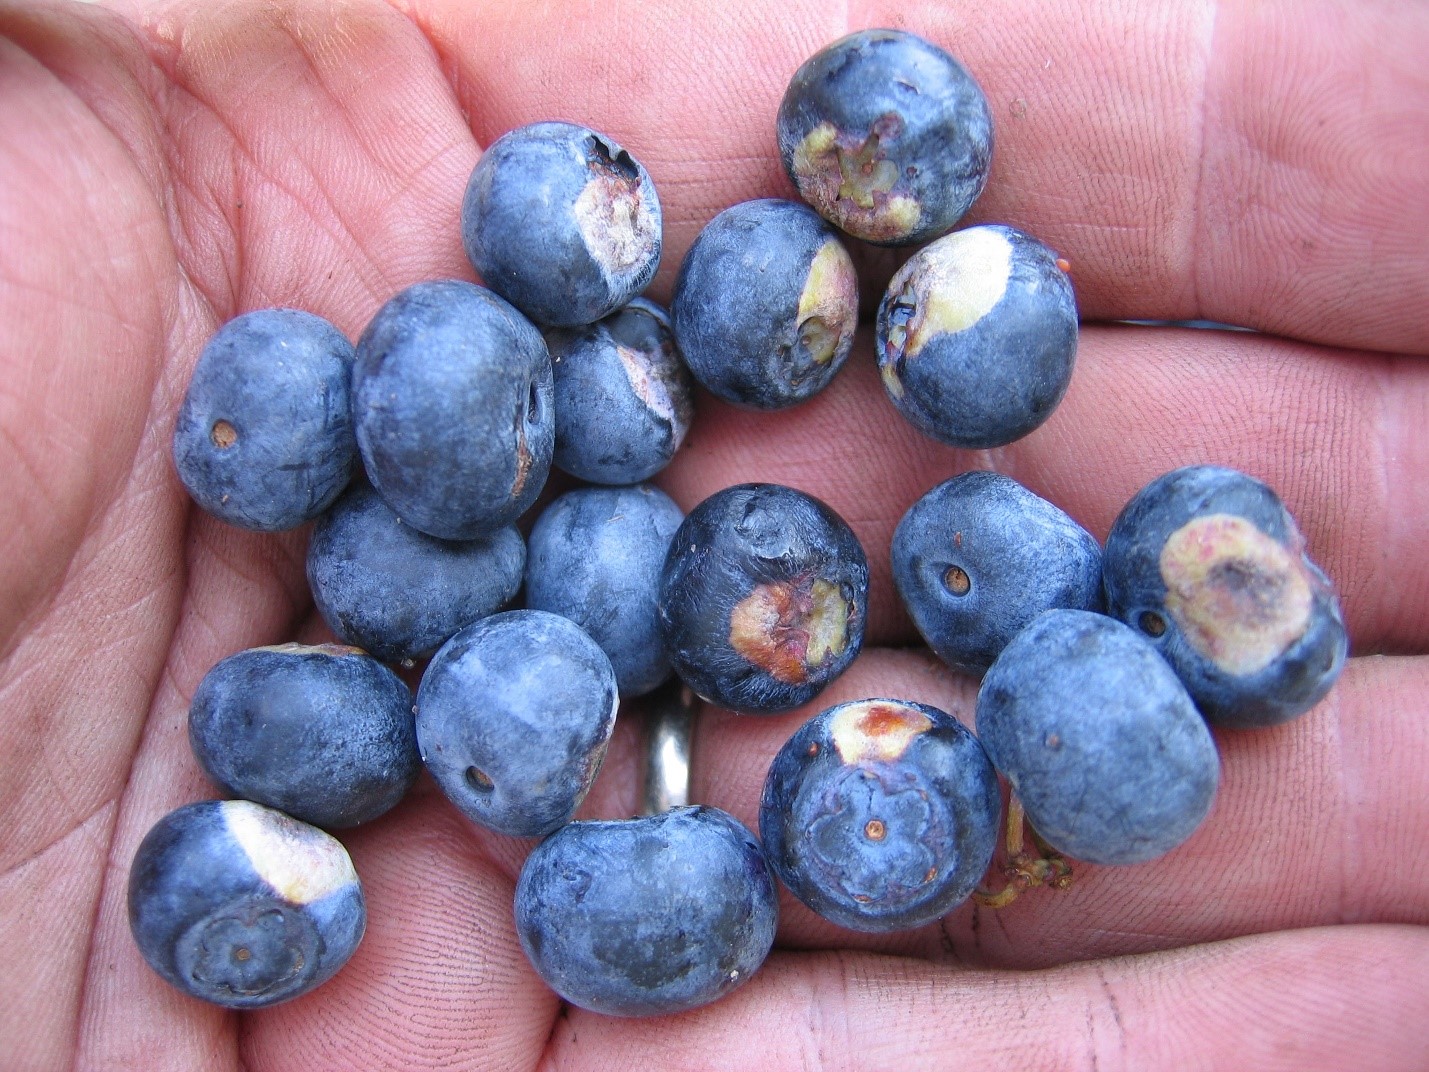 Exobasidium fruit spot on blueberries